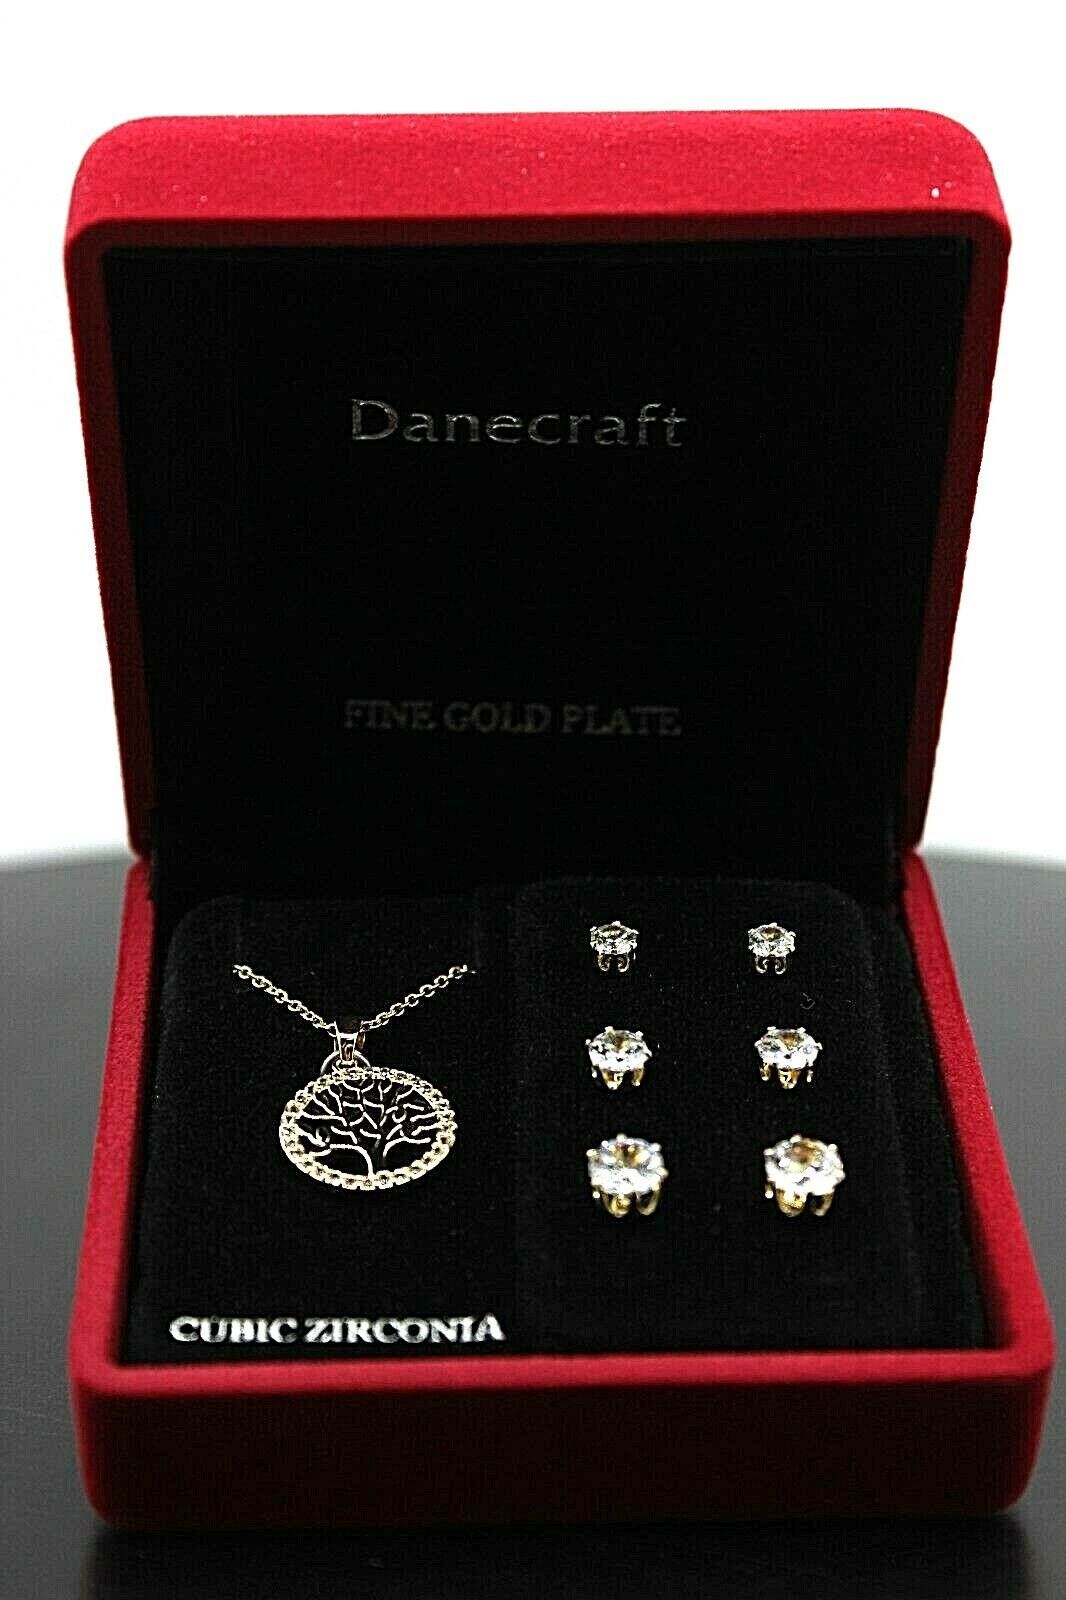 Danecraft Cubic Zirconia 3 Stud Earrings & Tree Necklace Set, Fine Gold Plate - $14.25